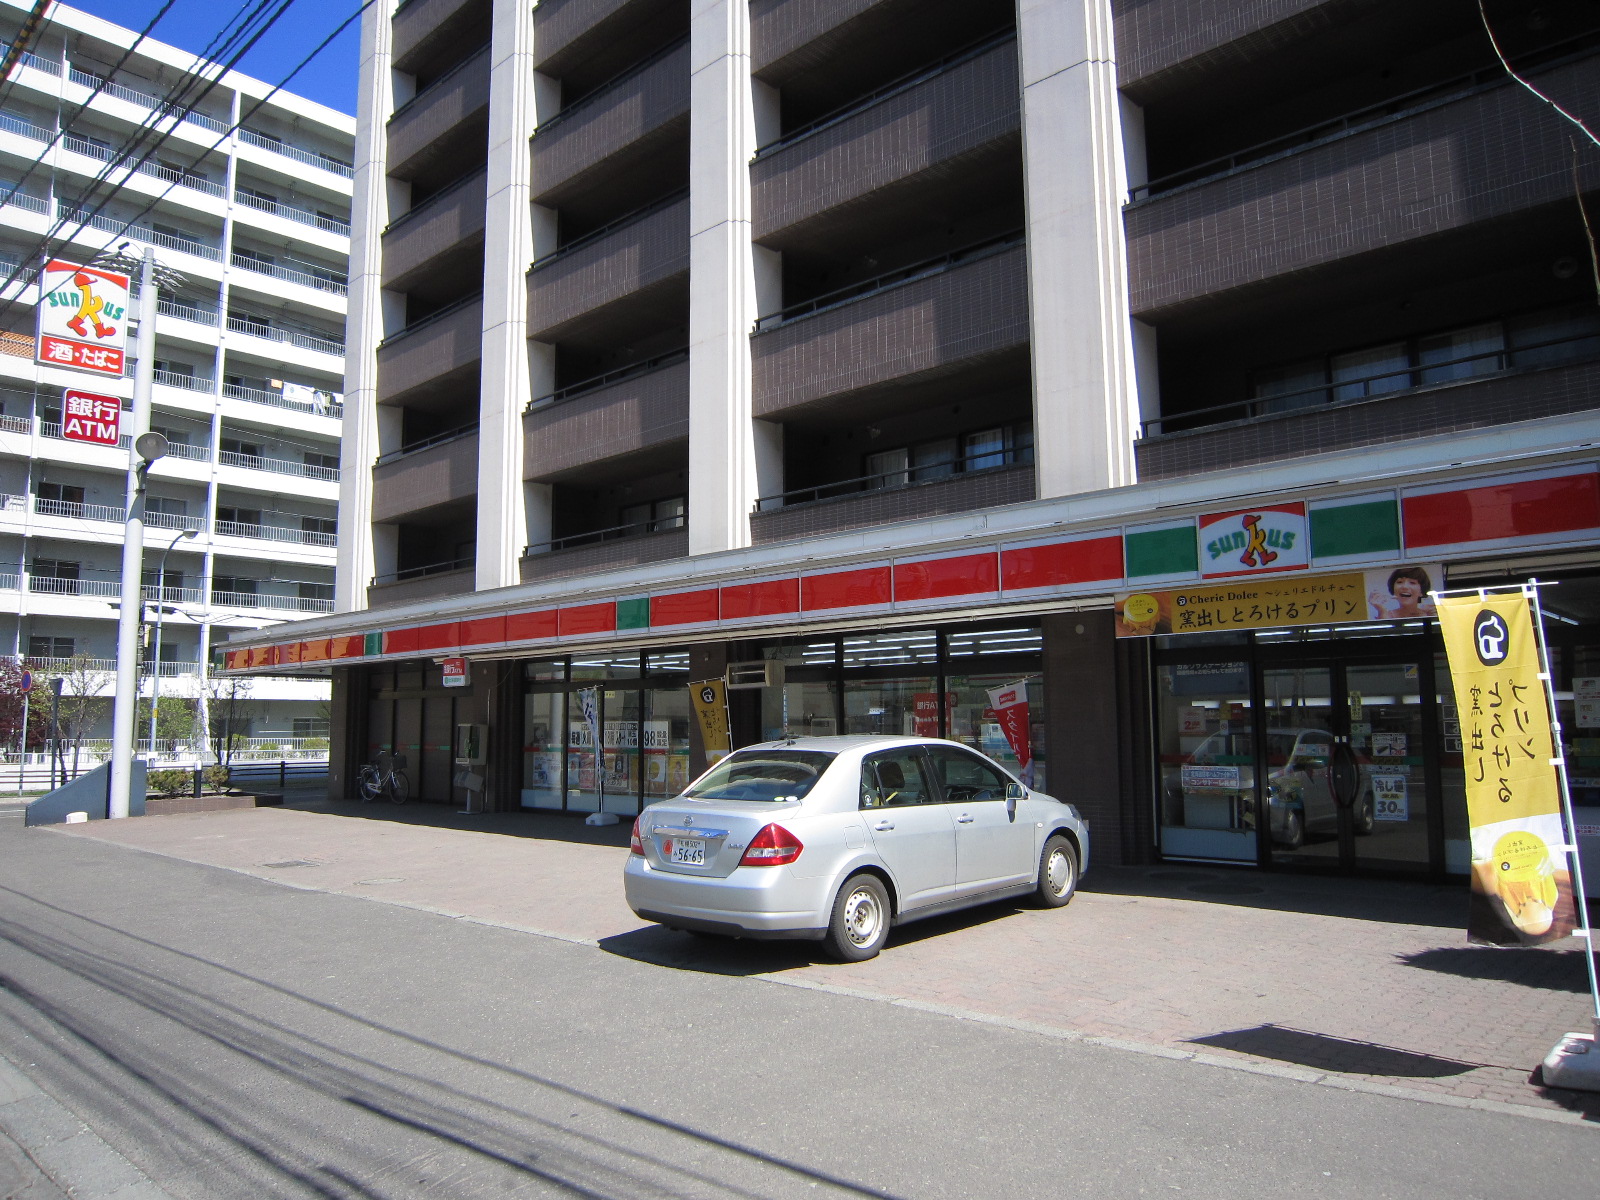 Convenience store. Thanks Kikusui Article 1 store up (convenience store) 170m